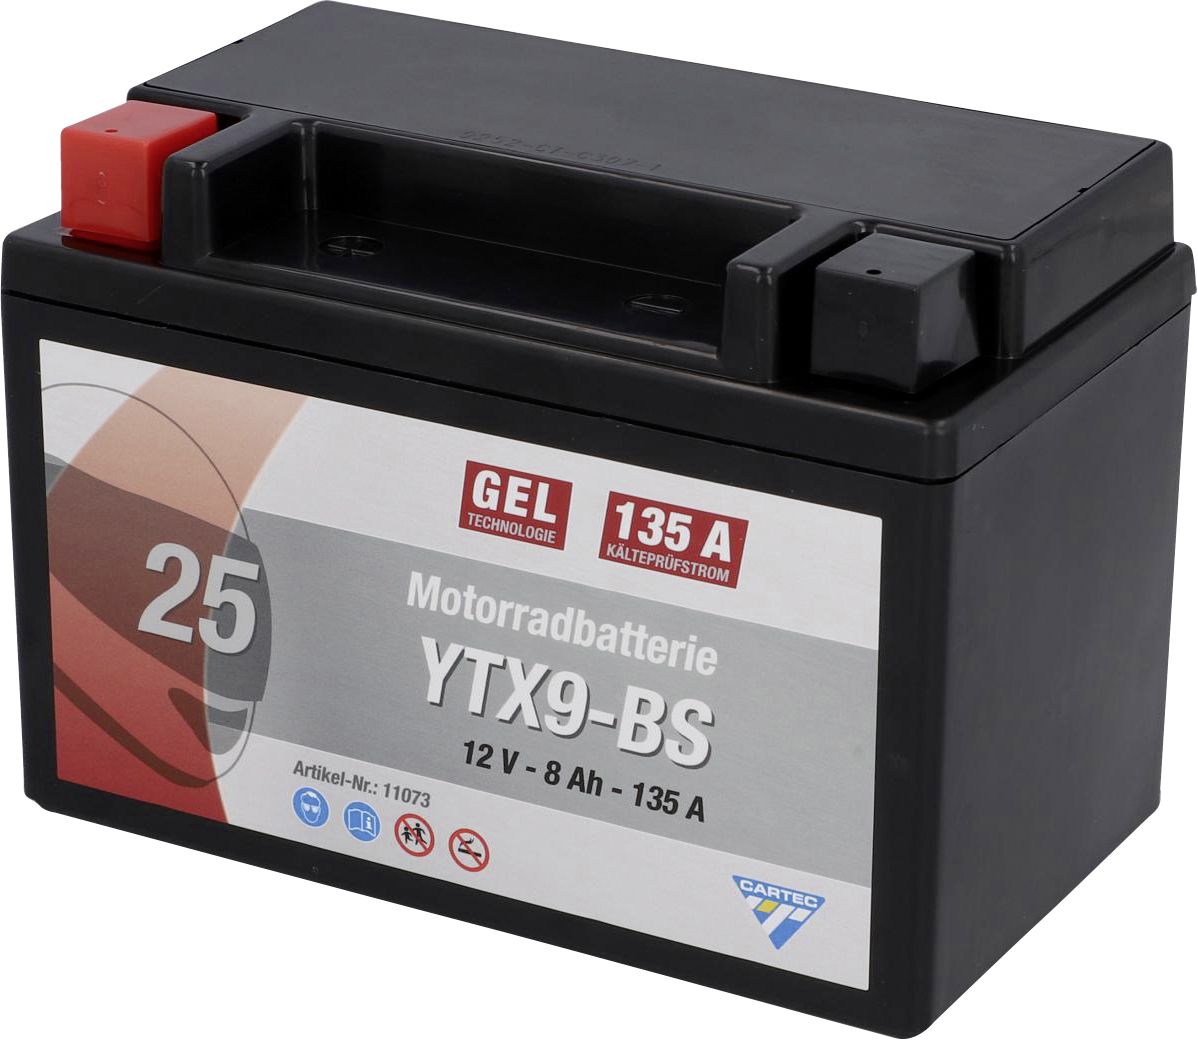 Cartec Gel Motorradbatterie YTX9-BS 8Ah 135A GLO680456084